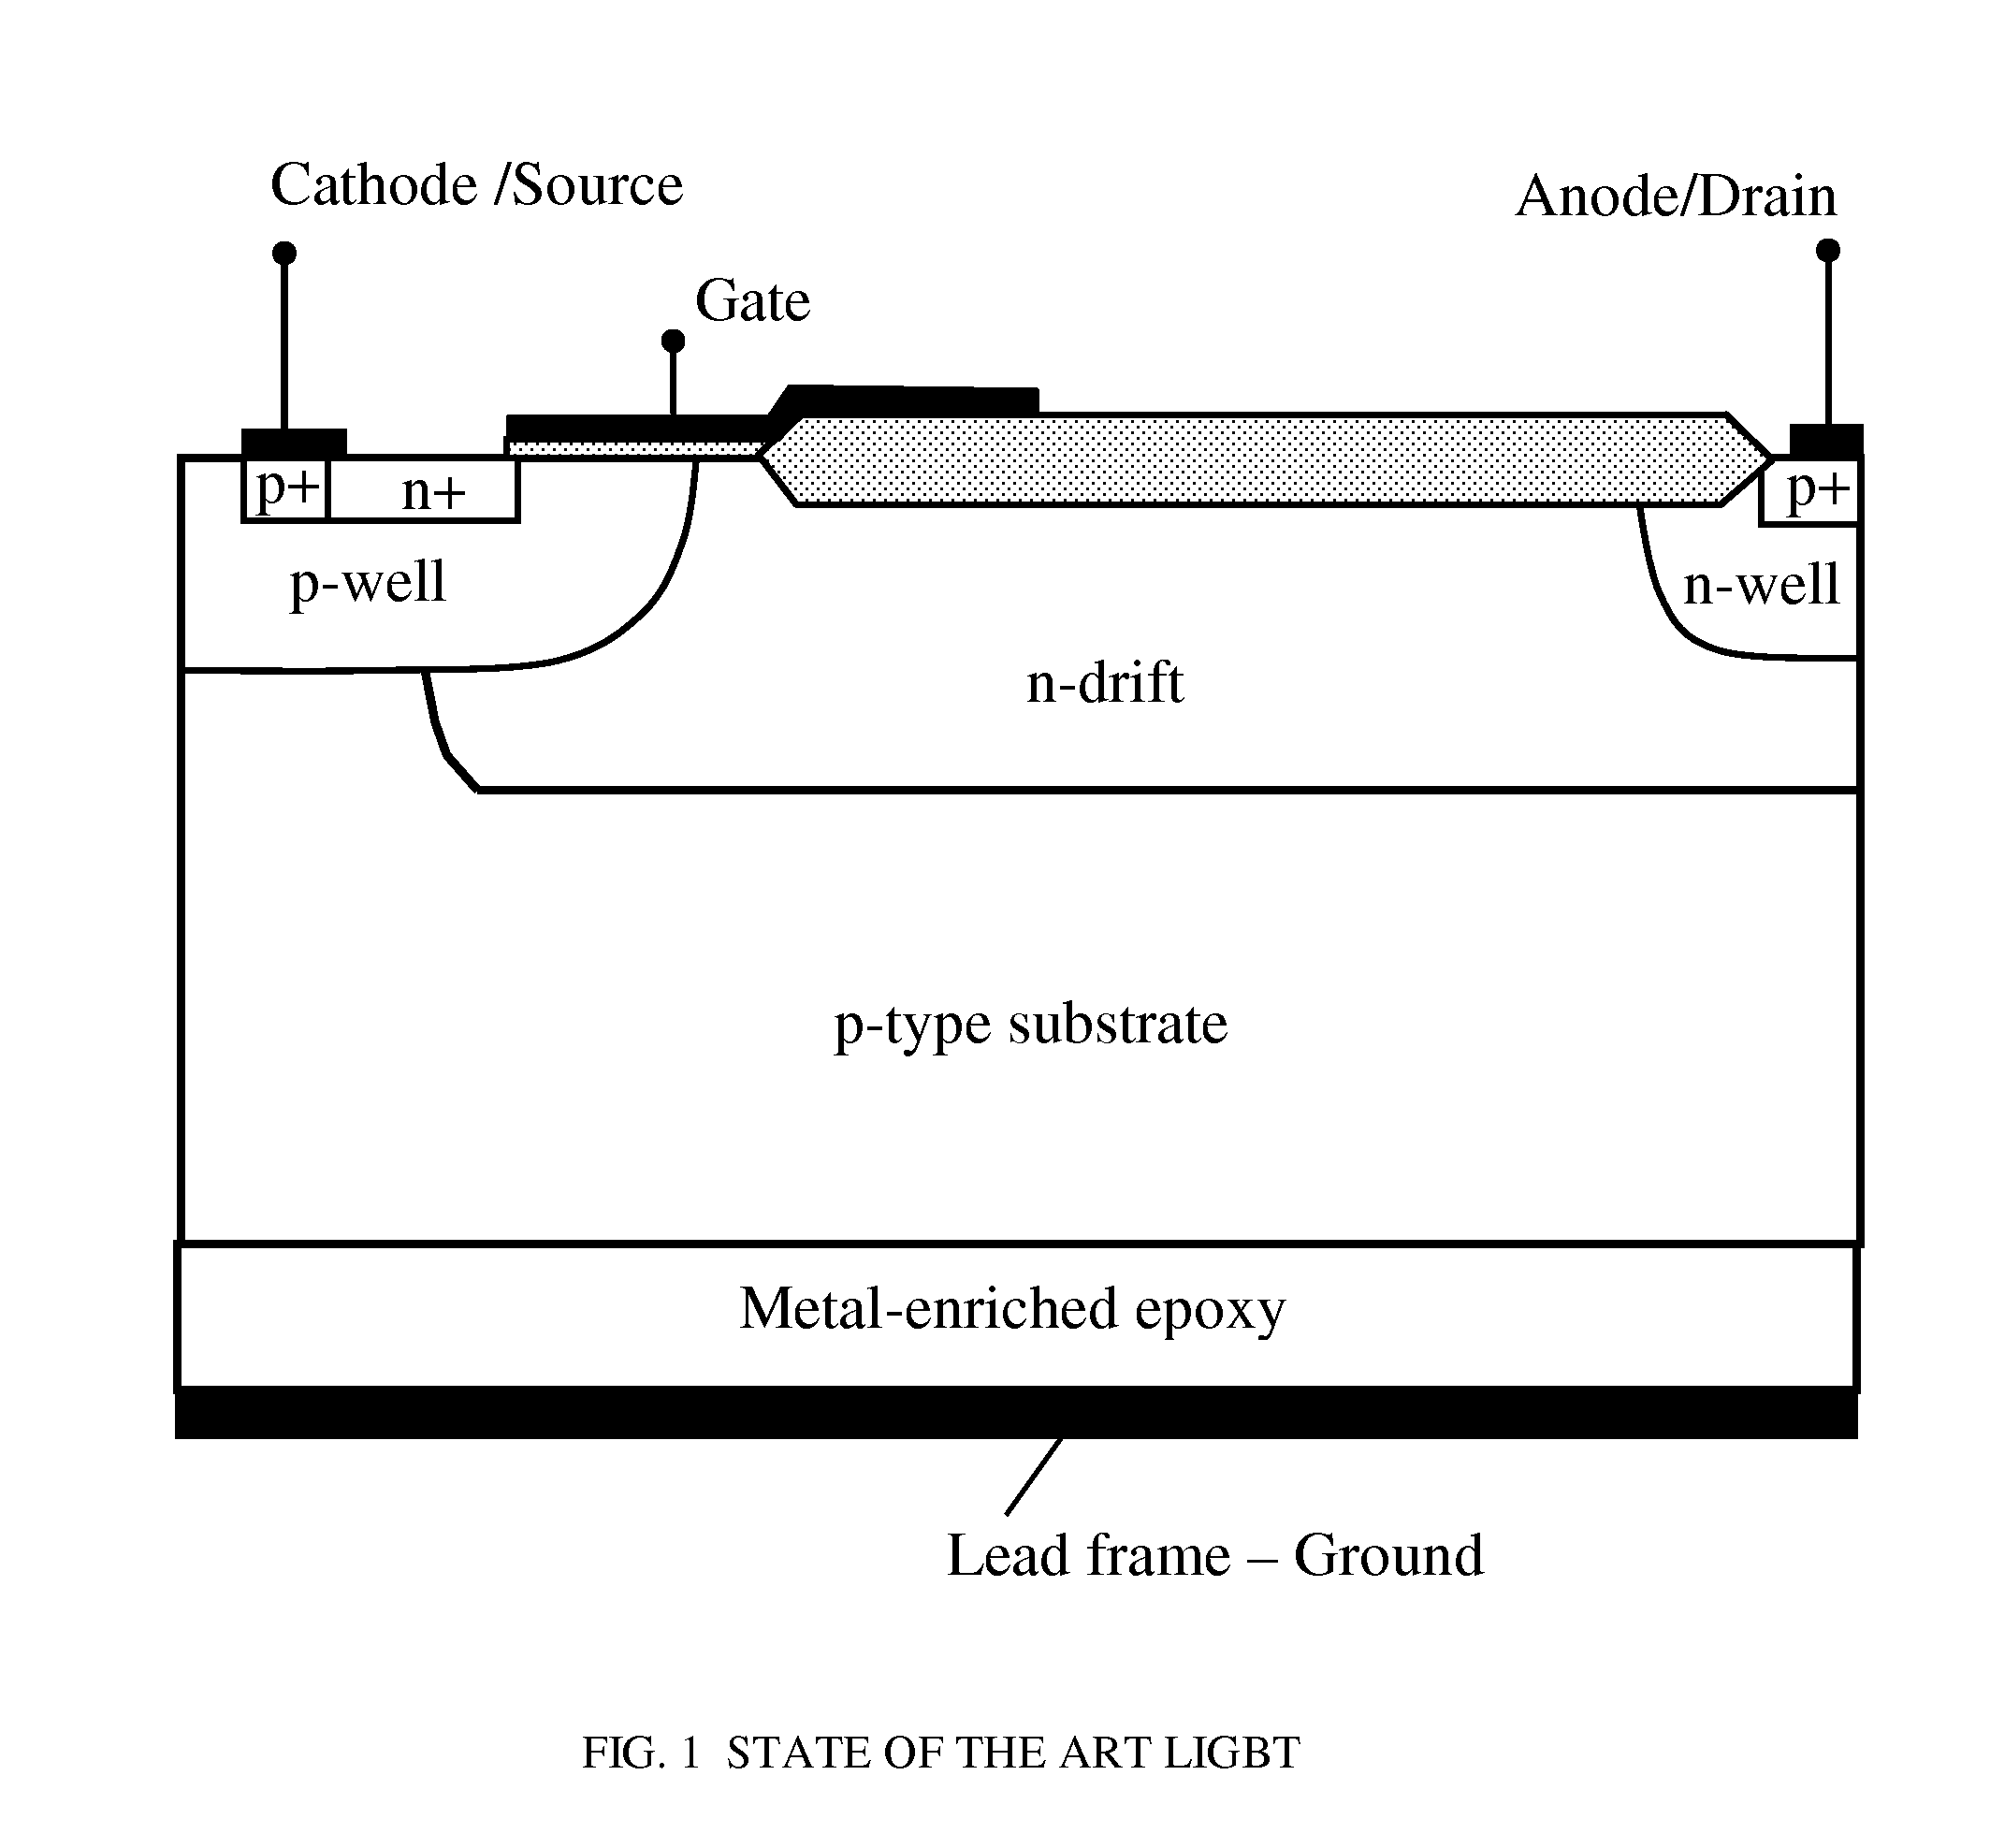 Lateral Insulated Gate Bipolar Transistor (LIGBT)